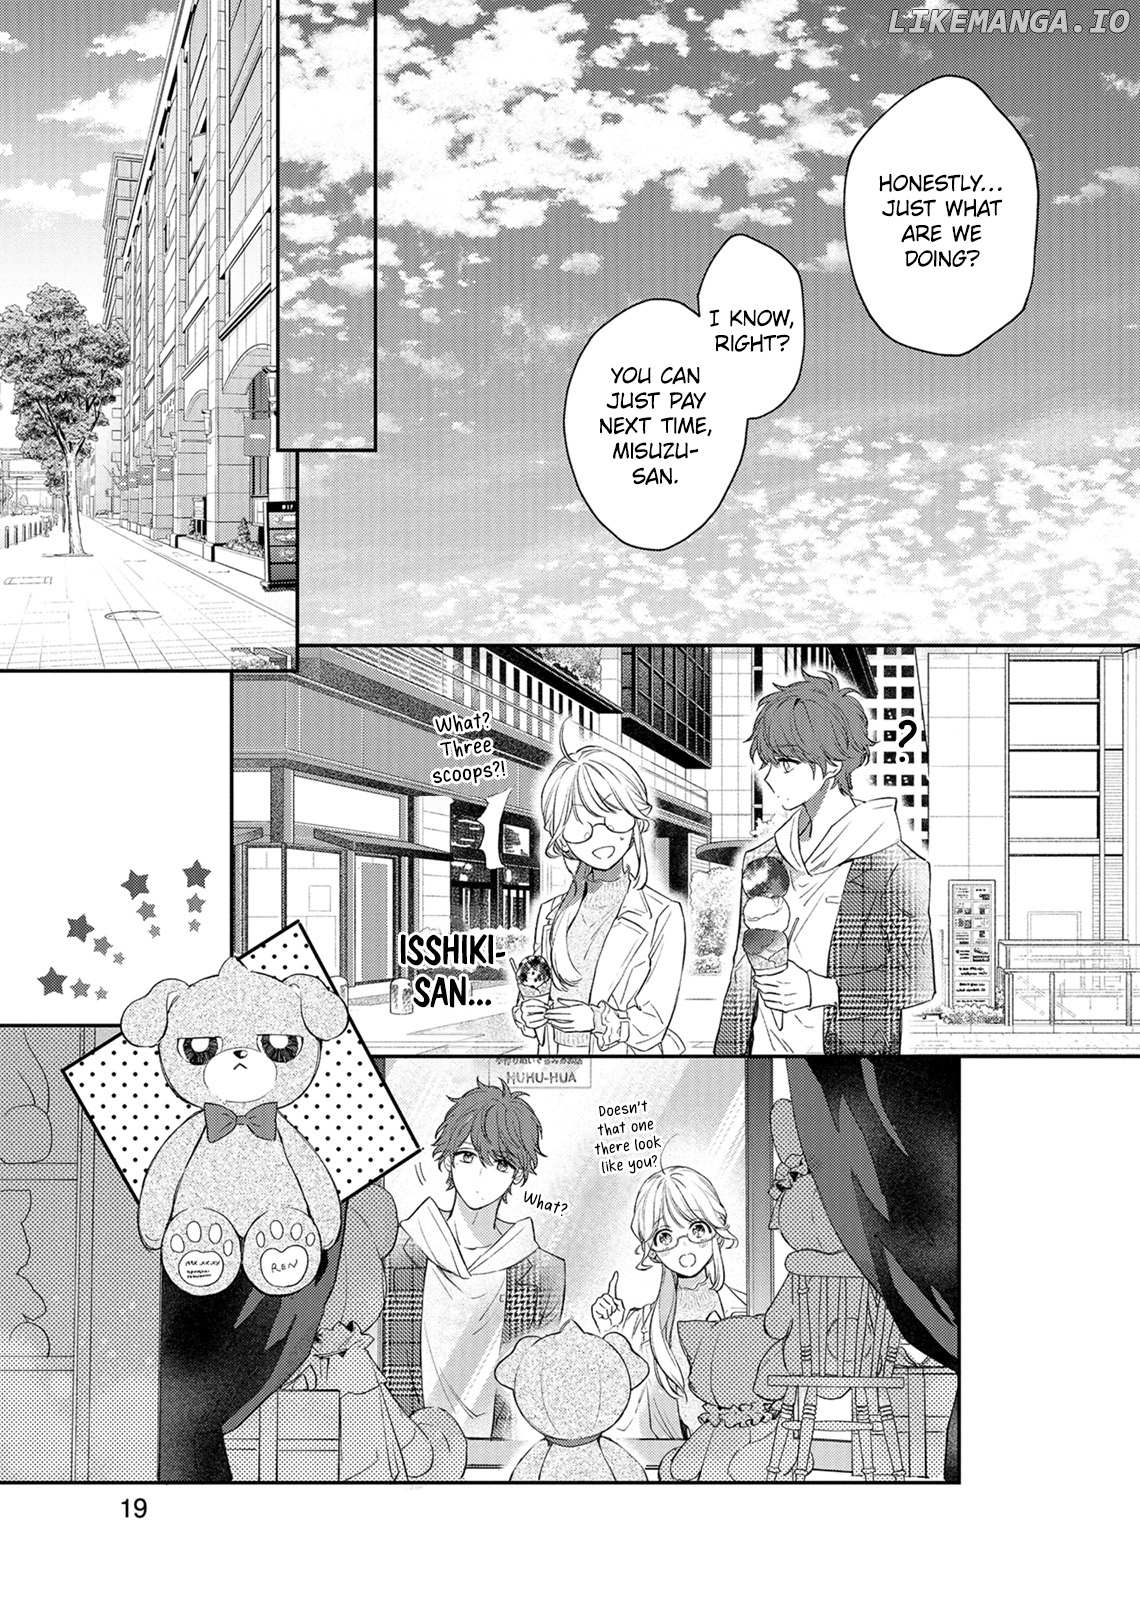 Hey Isshiki-kun, You Like Me, Don’t You? Chapter 3 - page 21